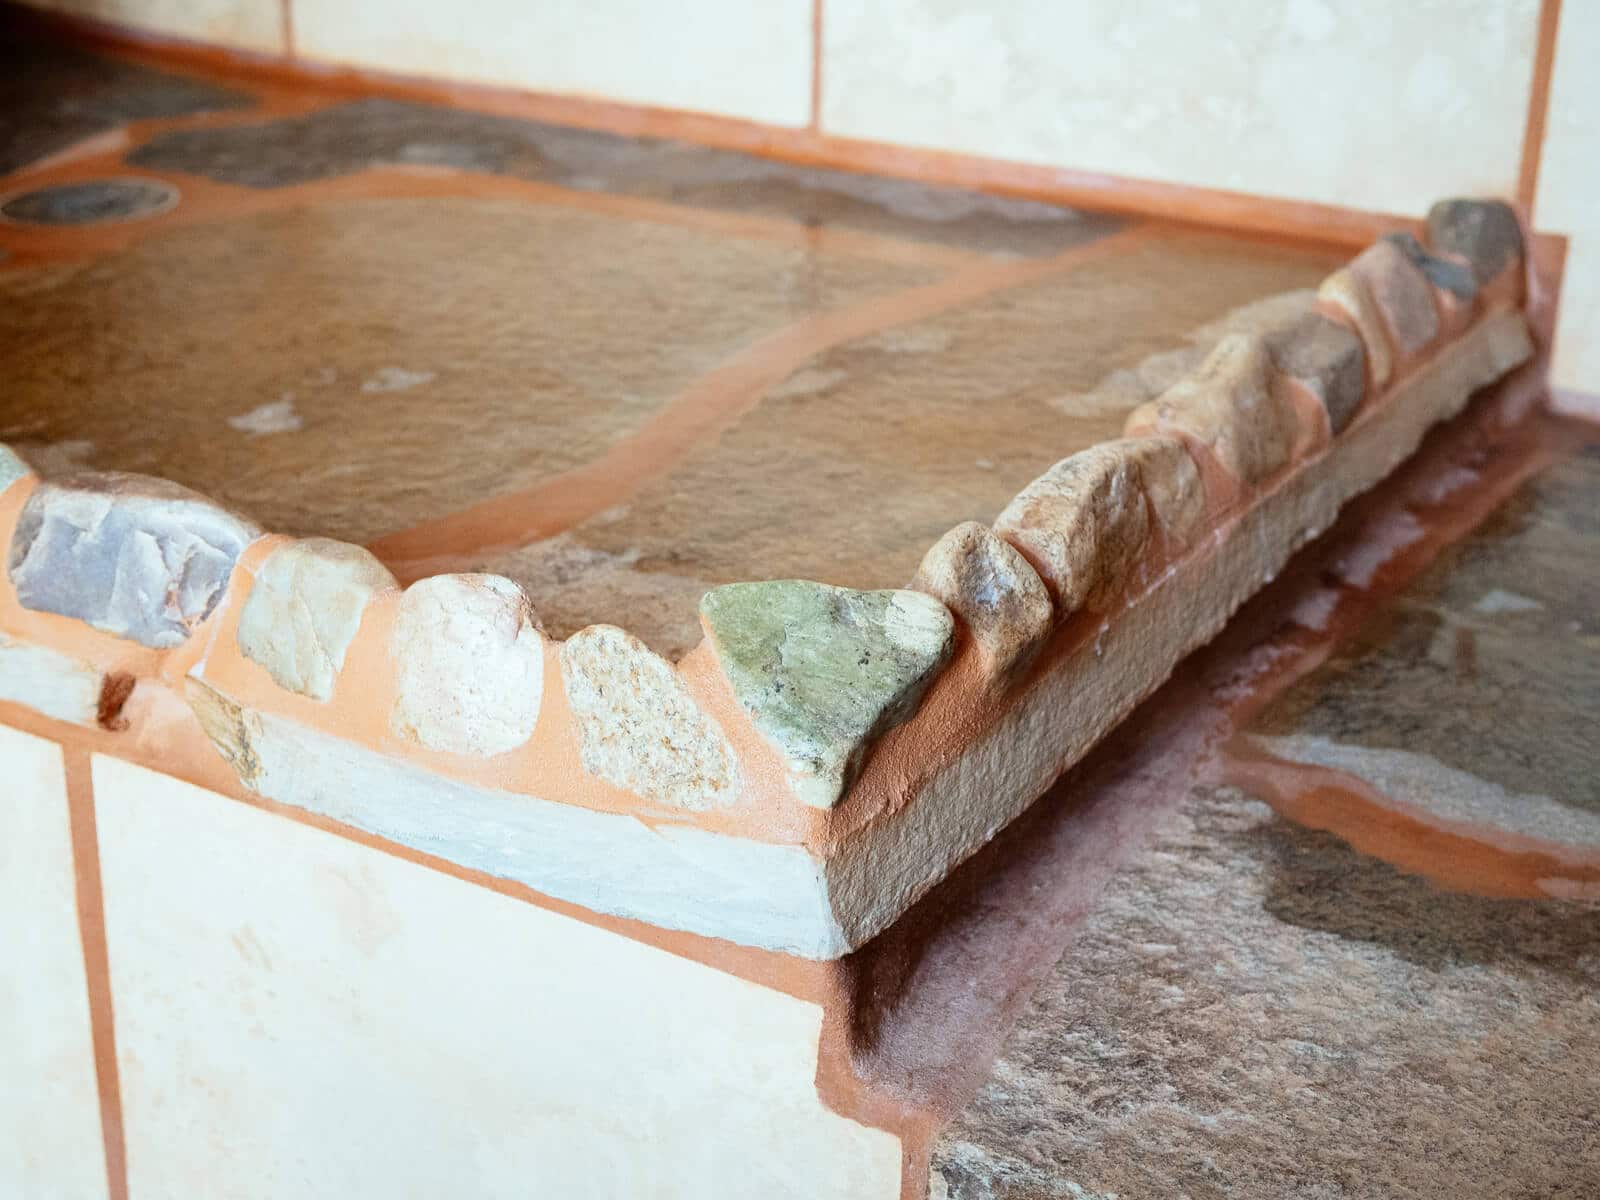 Custom stone work in an Earthship bathroom